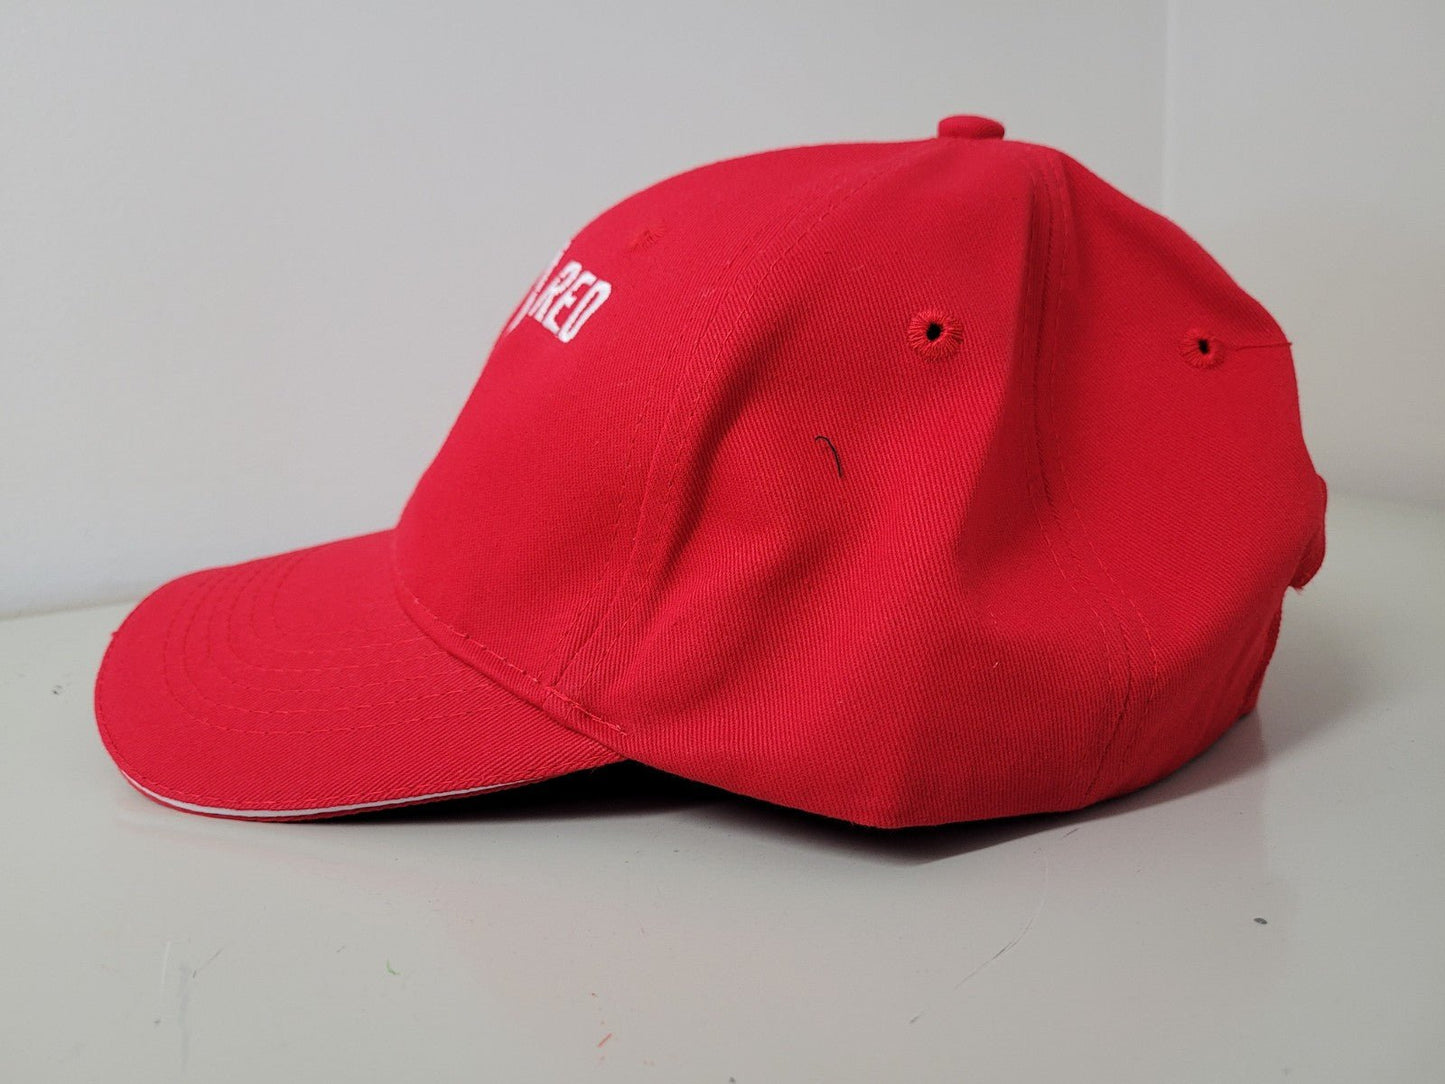 RAM (red) Edition Truck Baseball Cap | ParkersGear.com Hats